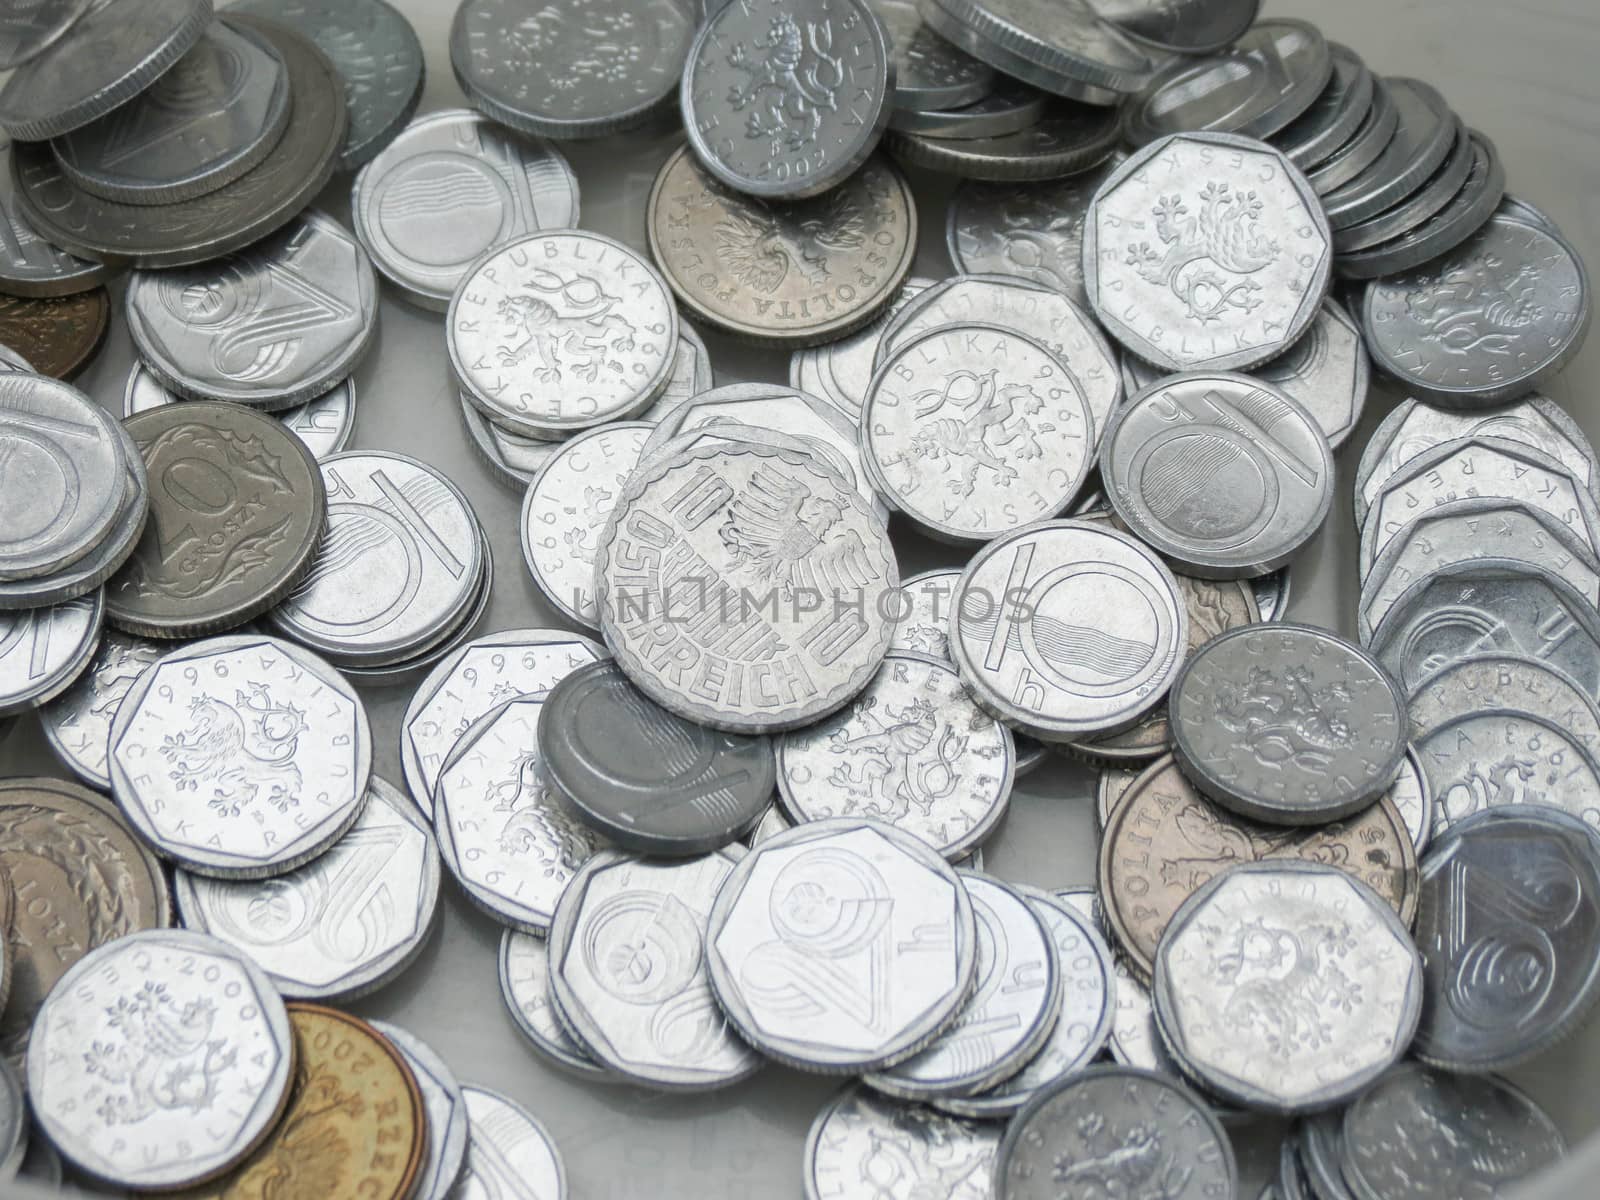 Czech korunas coins by paolo77